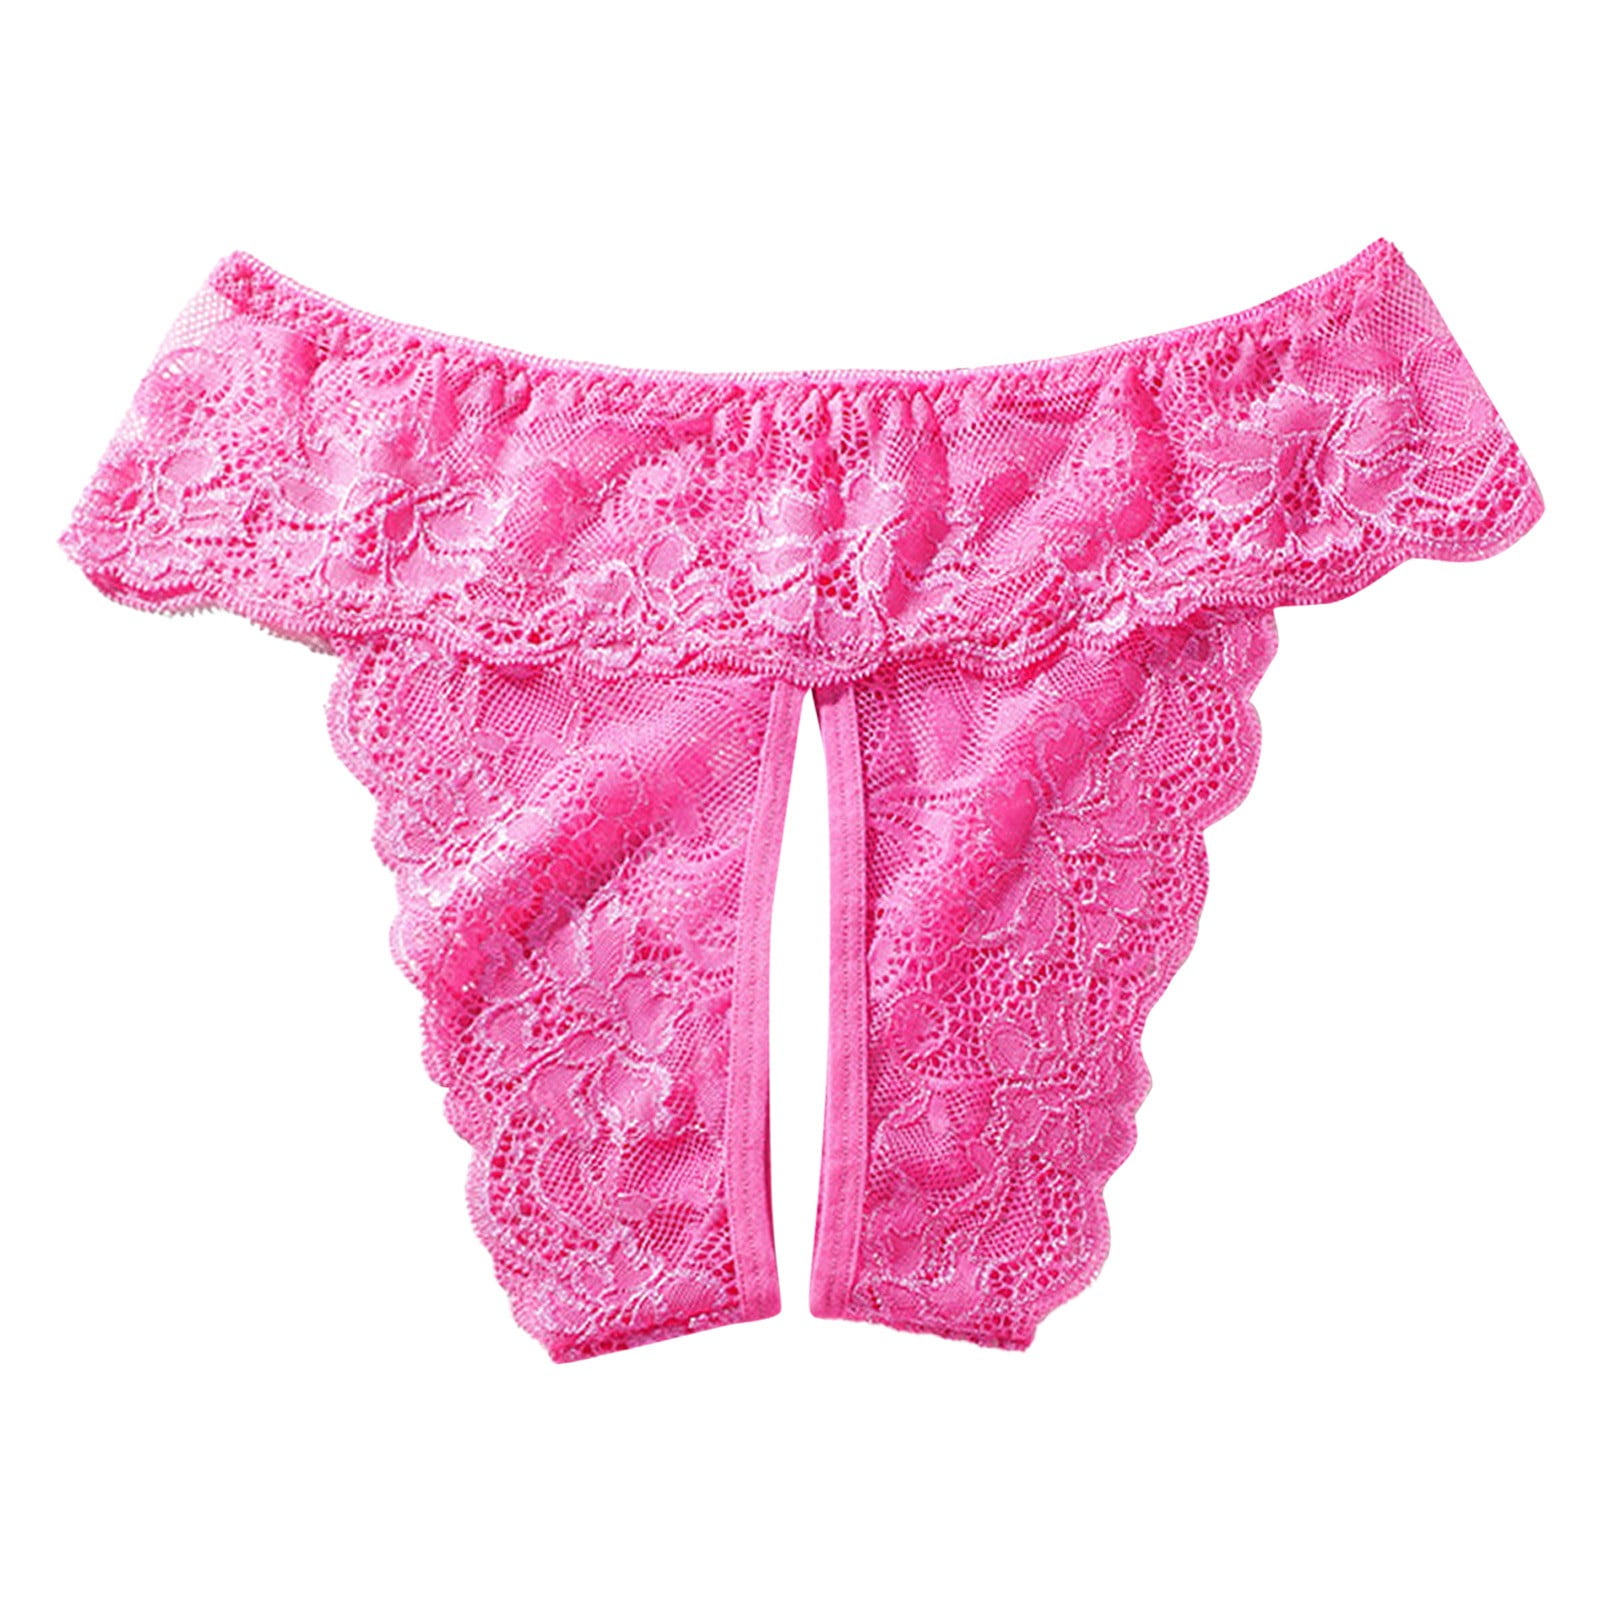 Aayomet Women's Plus Size Panties Thong Low Rise Cotton Underwear Cutout  Lace Bikini Briefs (Black, L) 